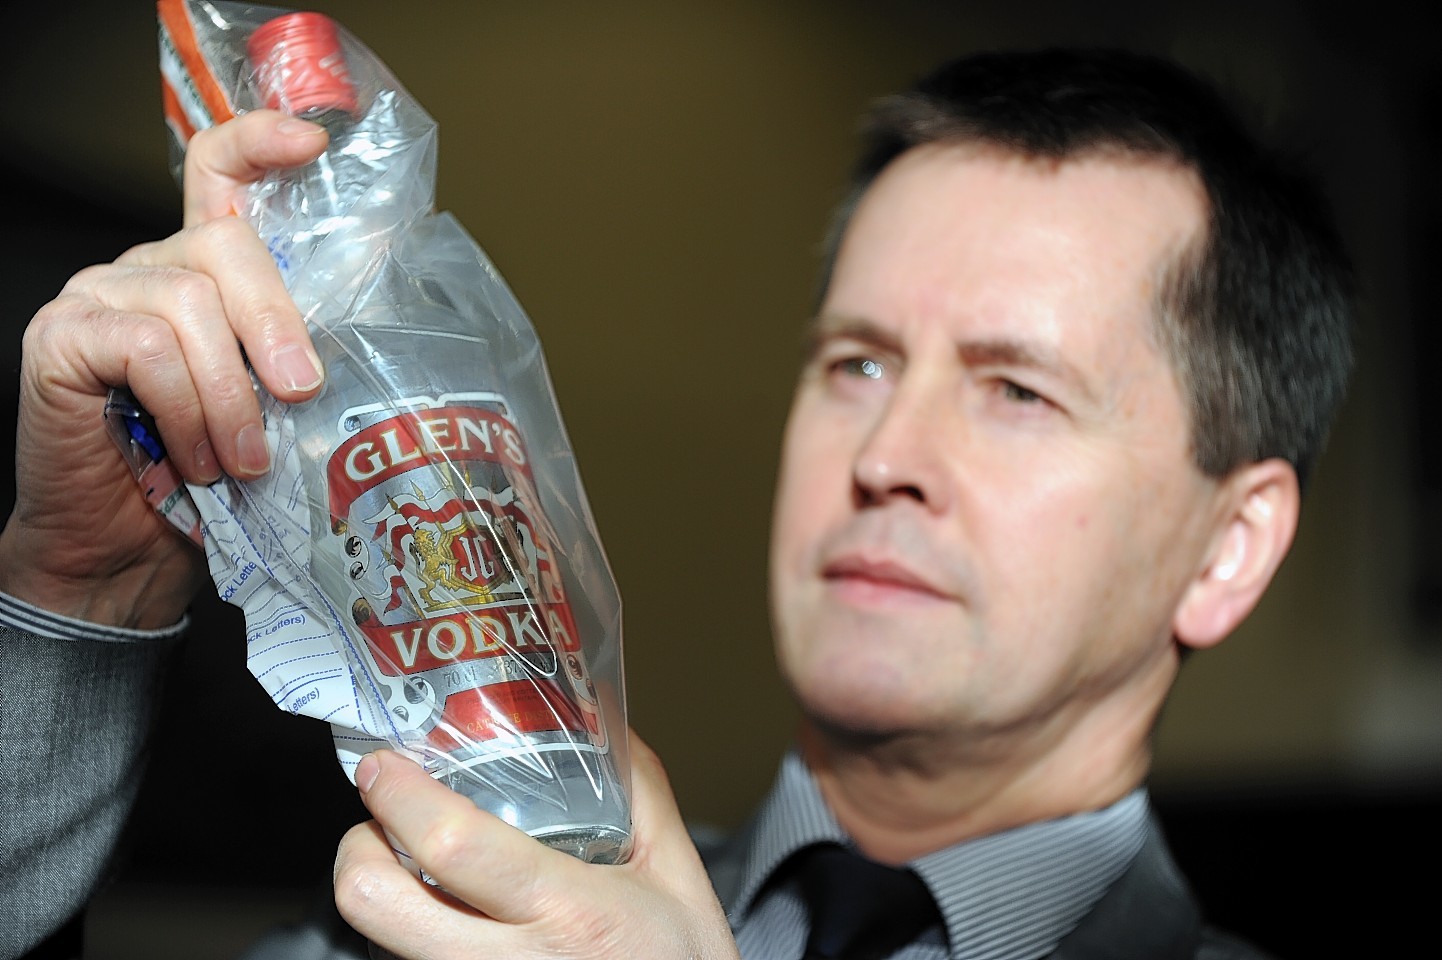 One of the seized fake bottles of Glen's Vodka